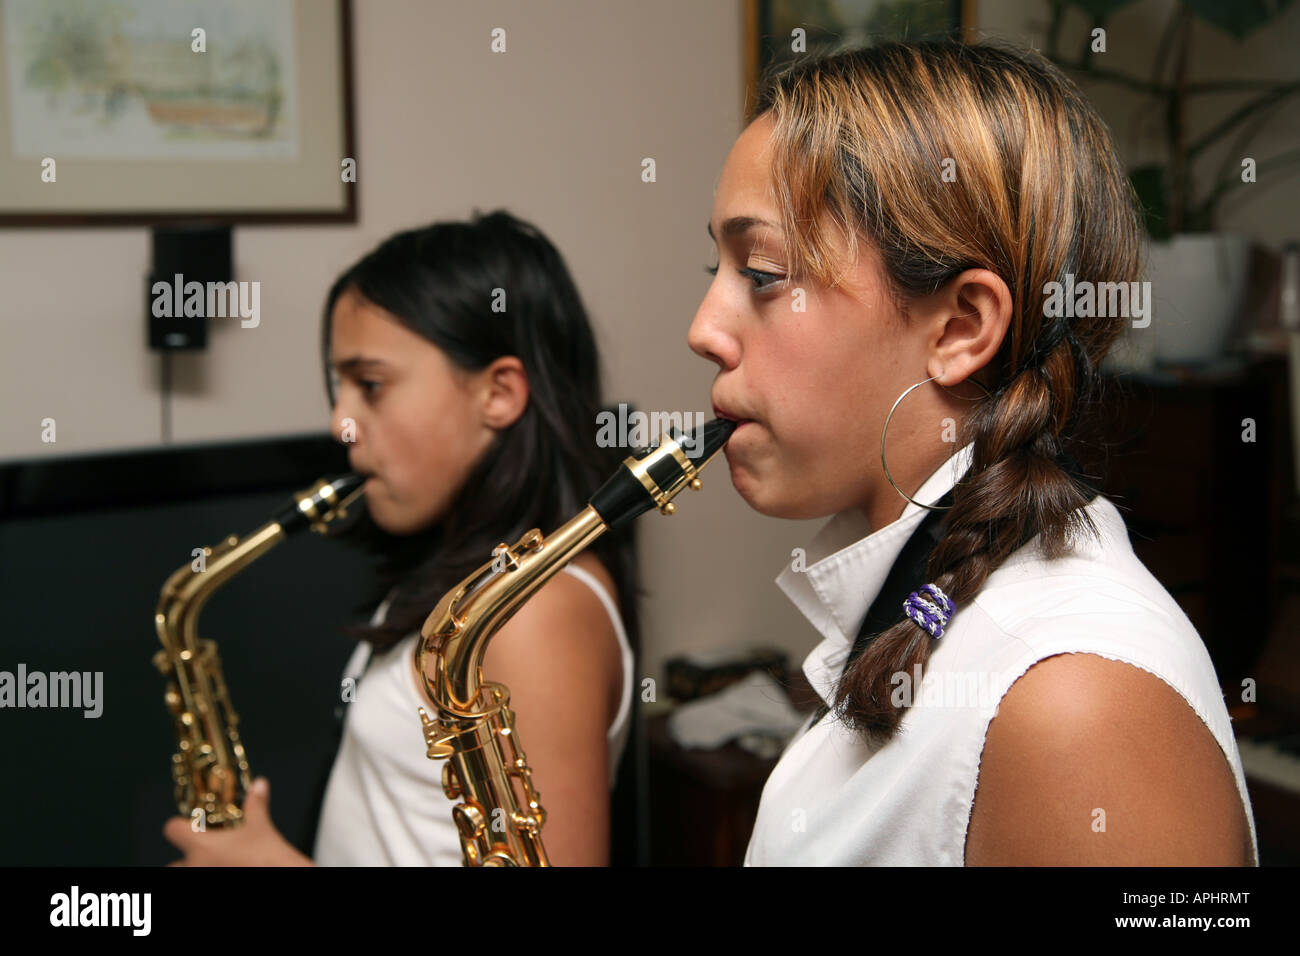 Two girls playing saxophones Stock Photo